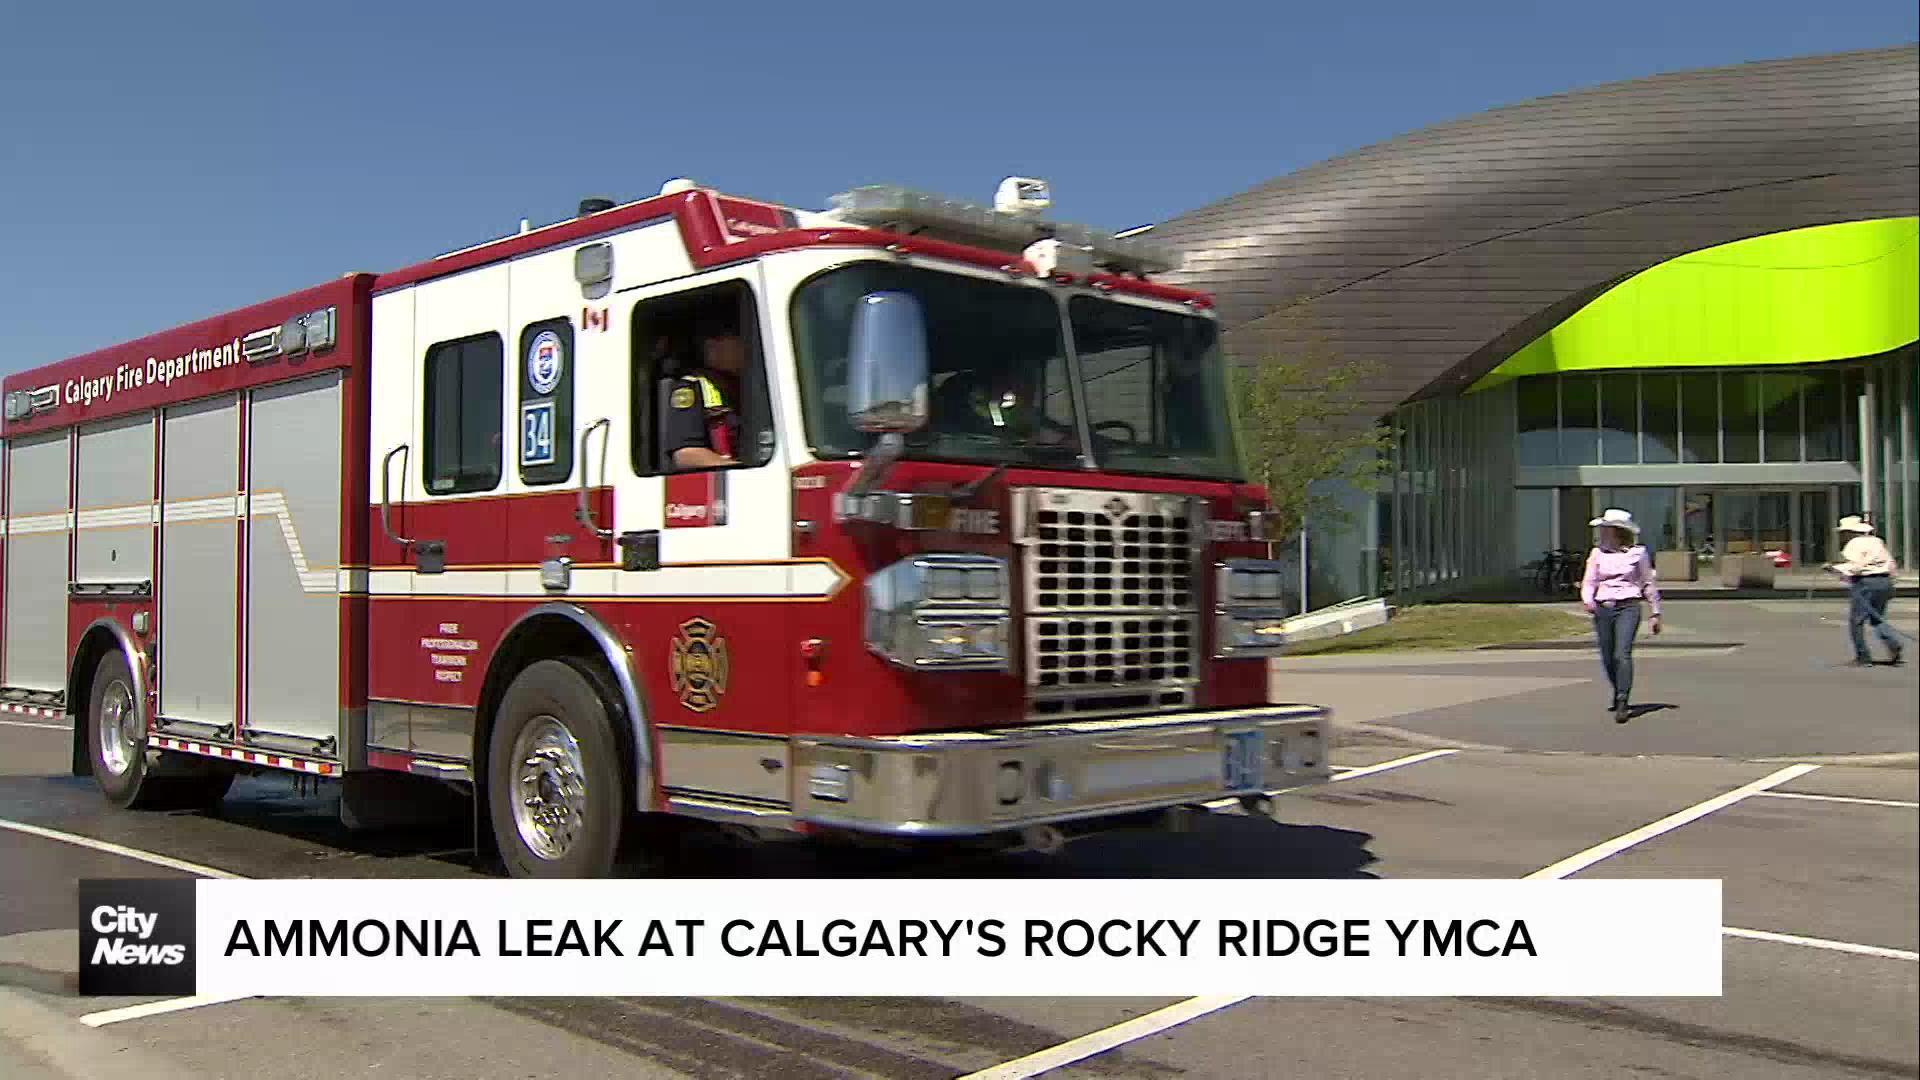 Another ammonia leak at Rocky Ridge YMCA